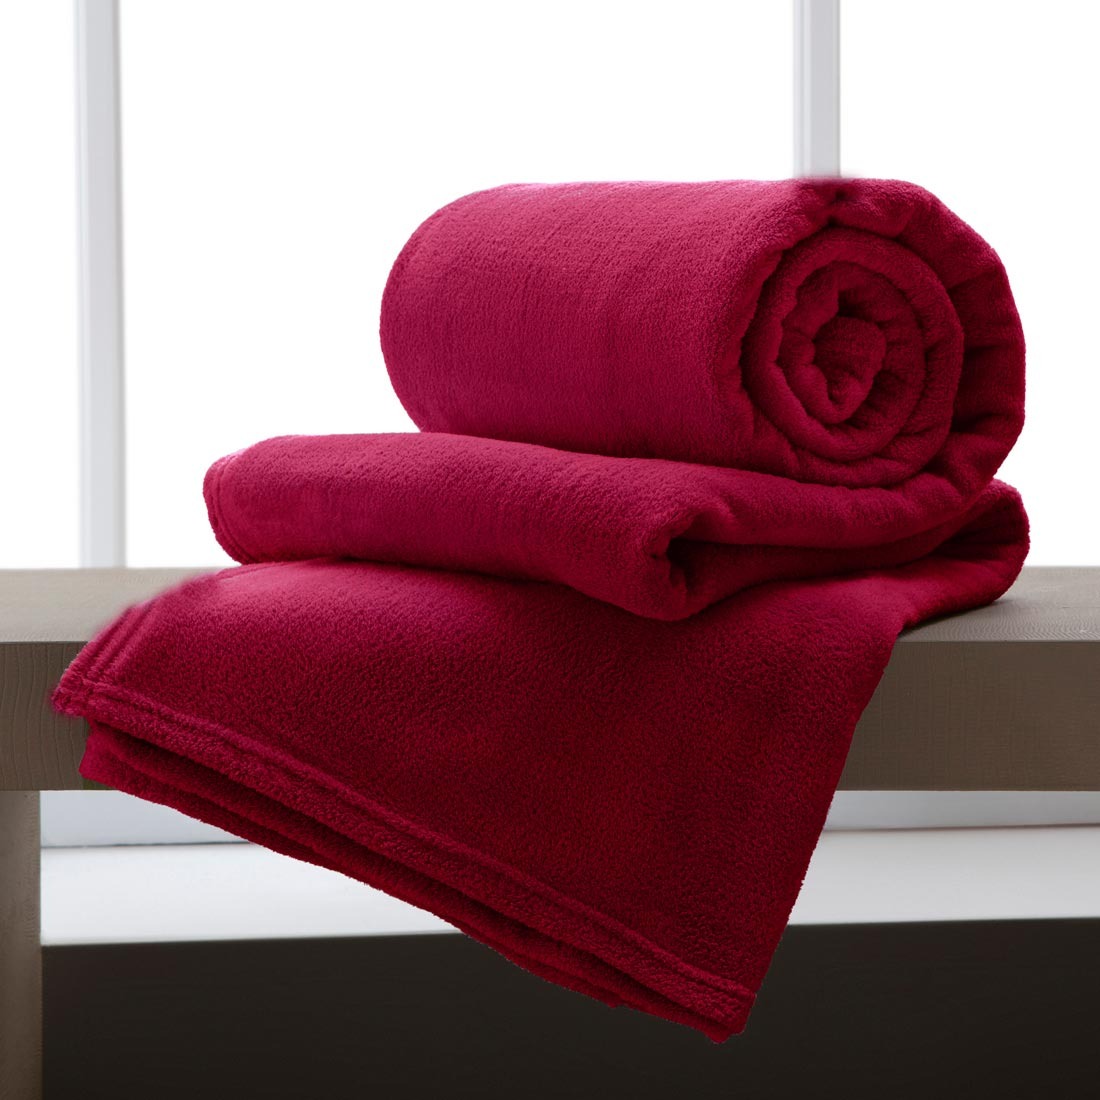 Cobertor/ Manta Casal De Microfibra Vermelho Corttex R